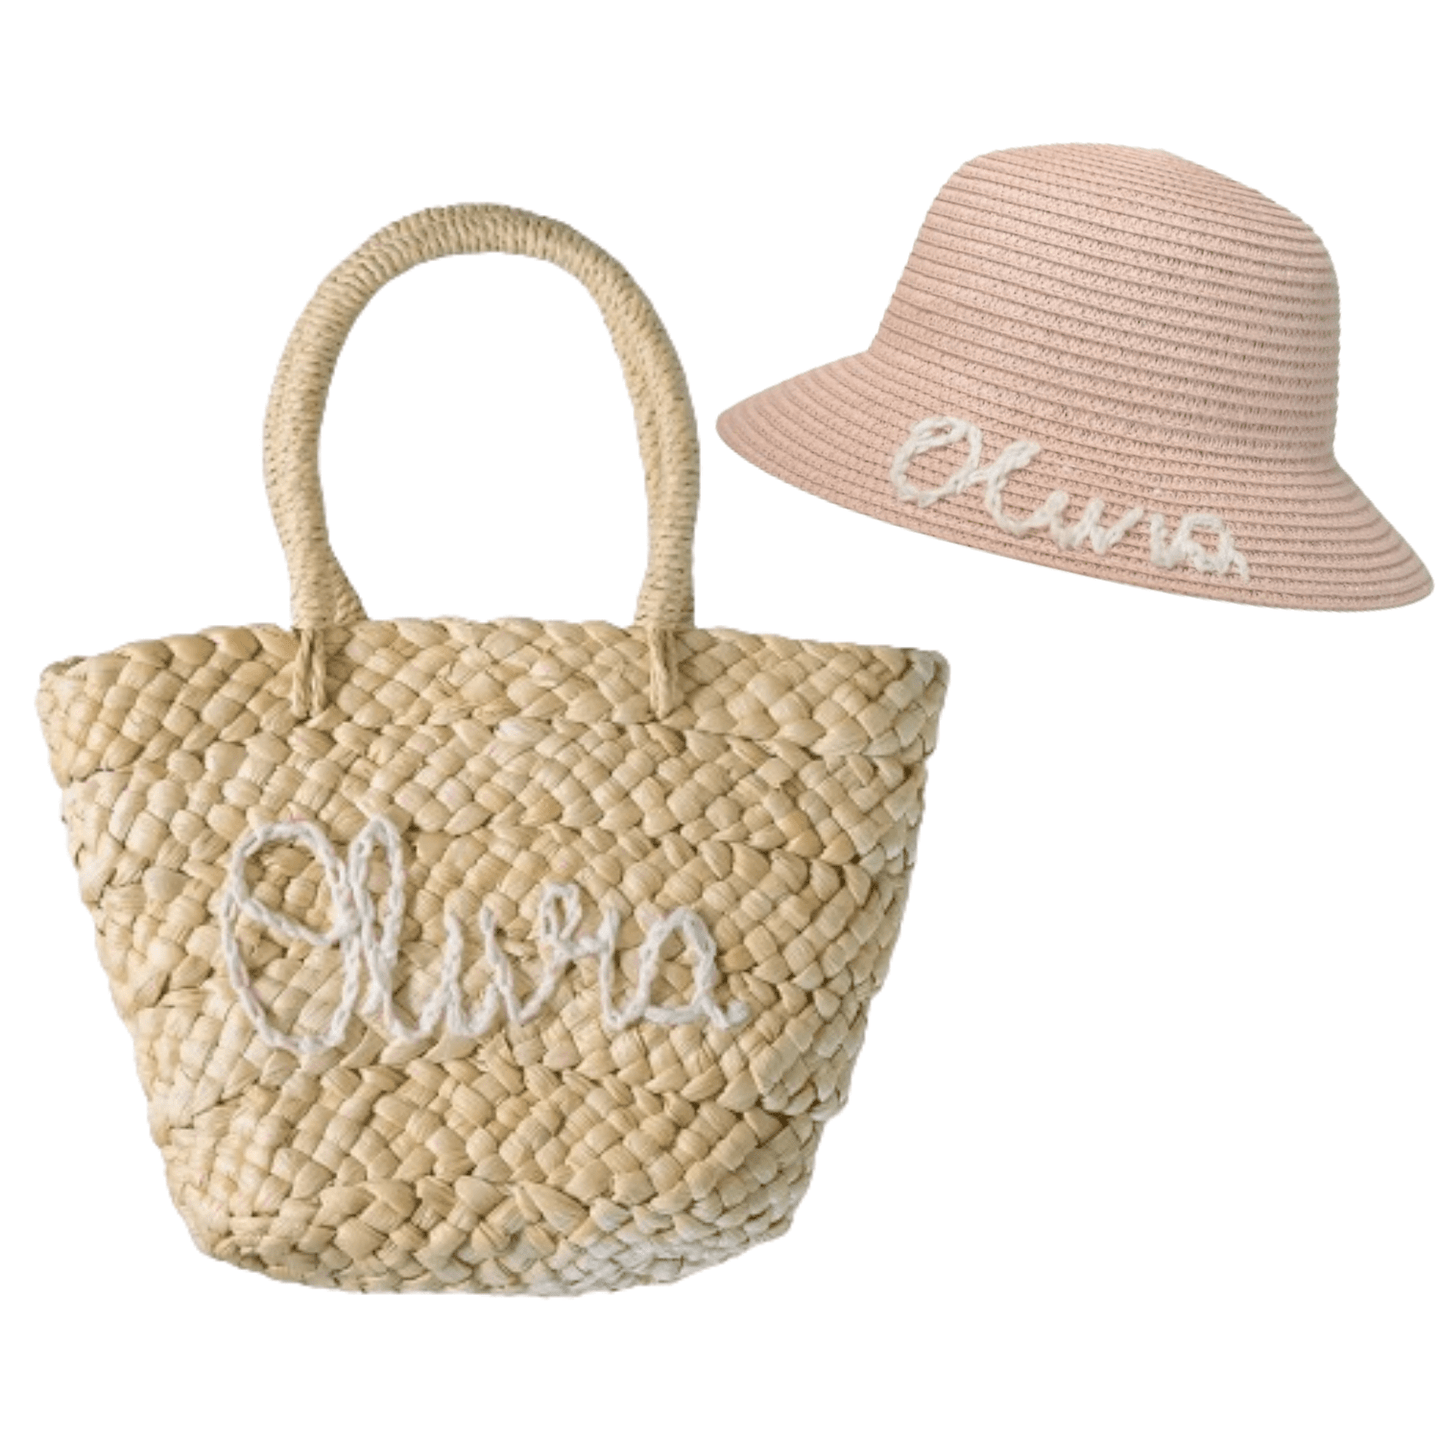 More Than Words - Little Beach Bag & Sun Hat Set